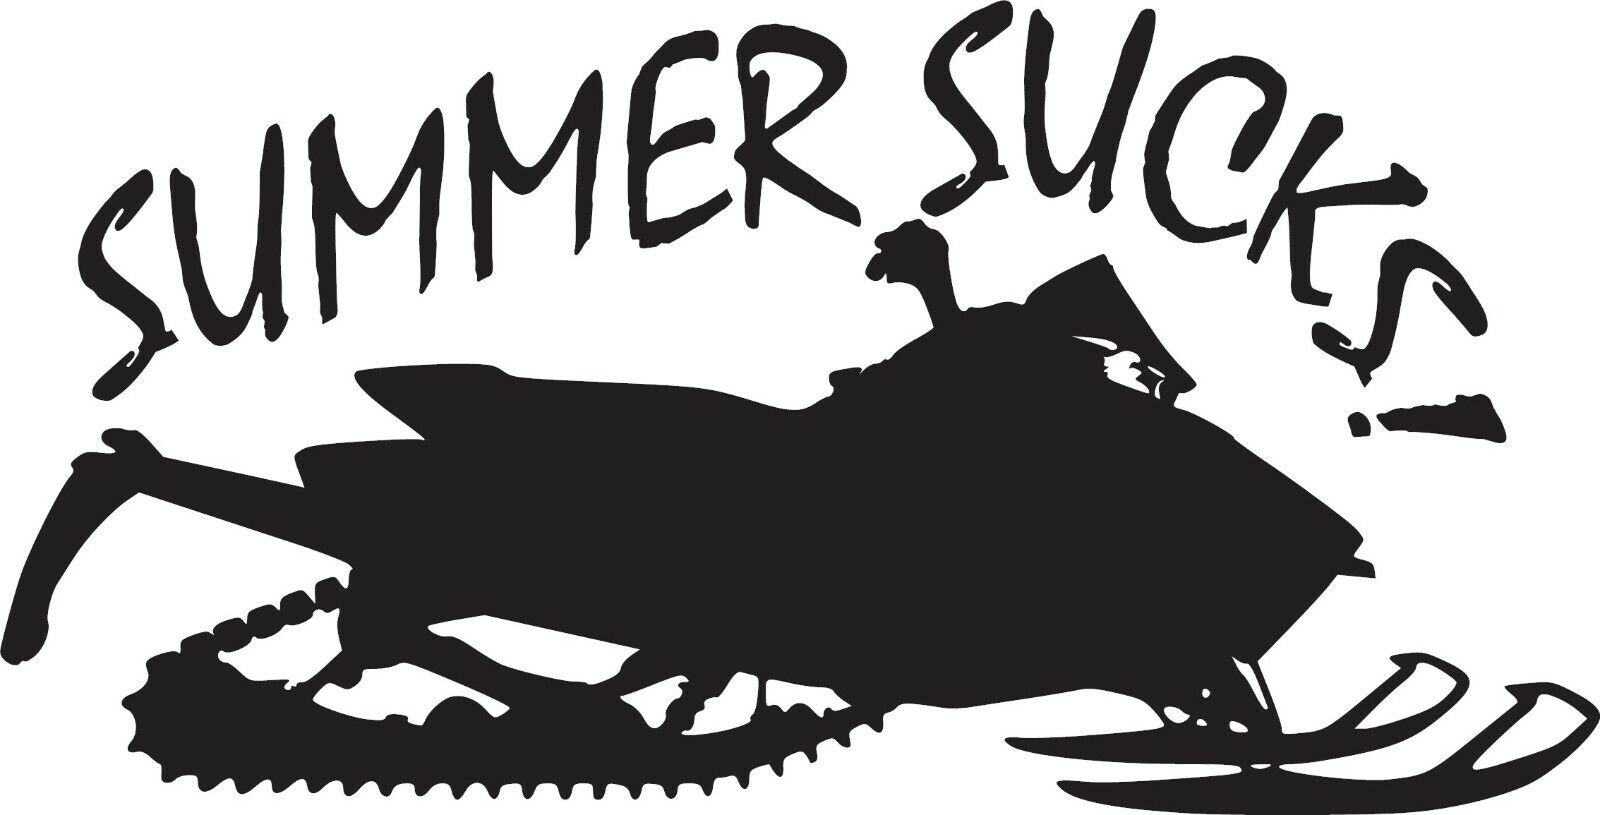 Snowmobile Summer Sucks Vinyl Decal sticker SKI-DOO ARCTIC CAT YAMAHA POLARIS